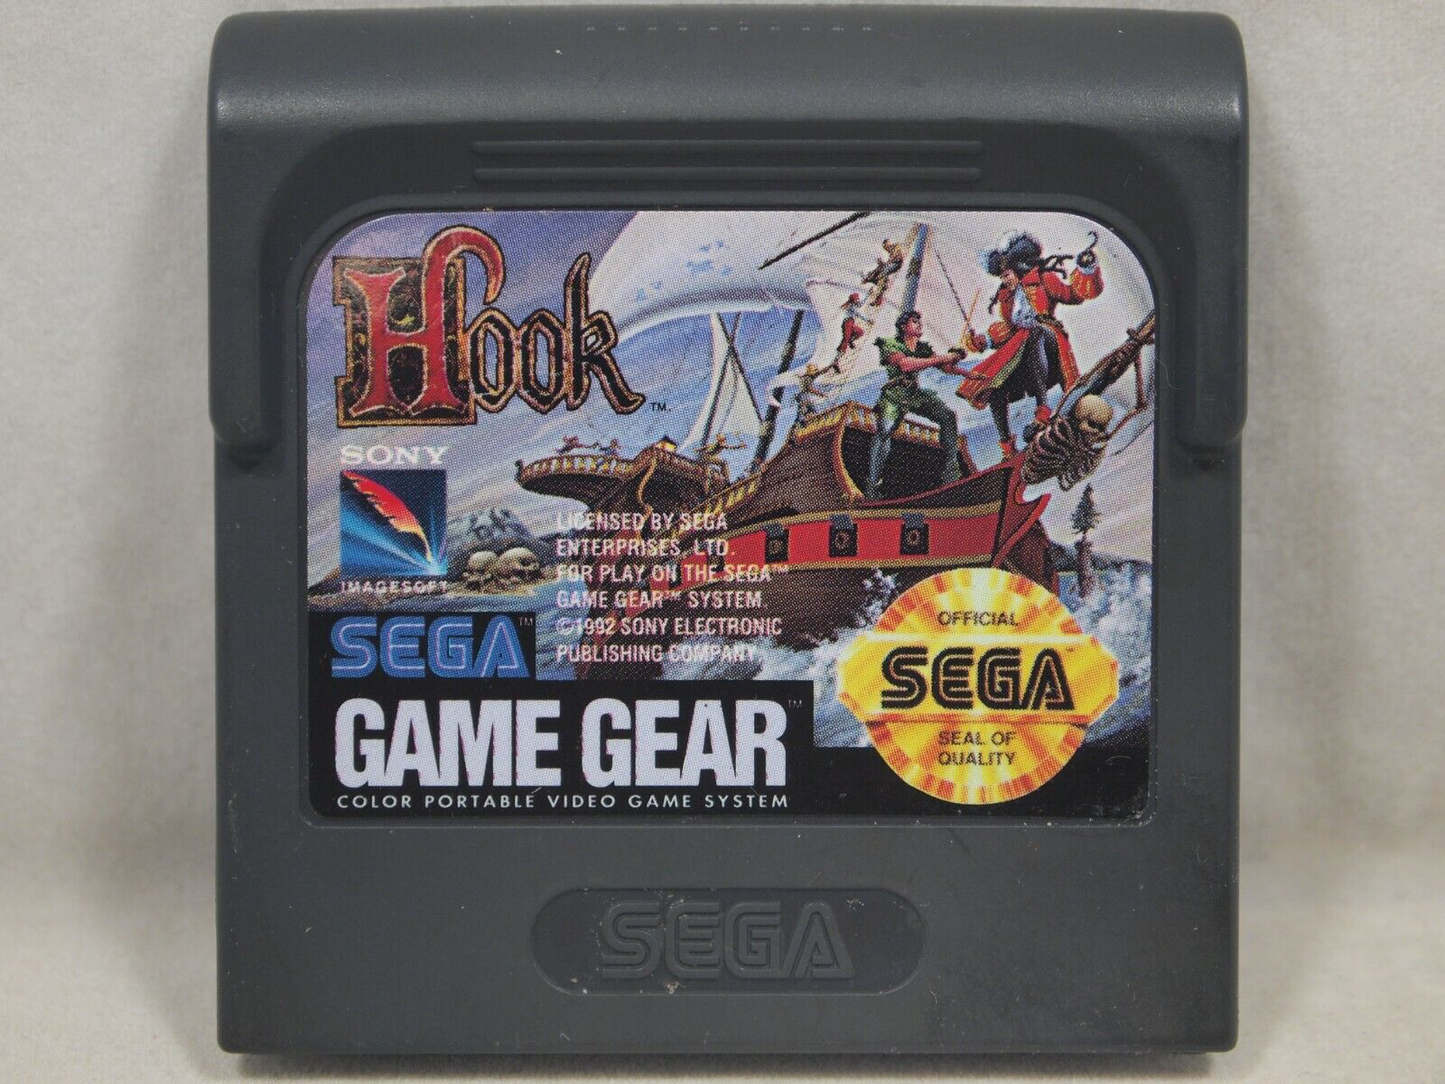 Hook - Game Gear